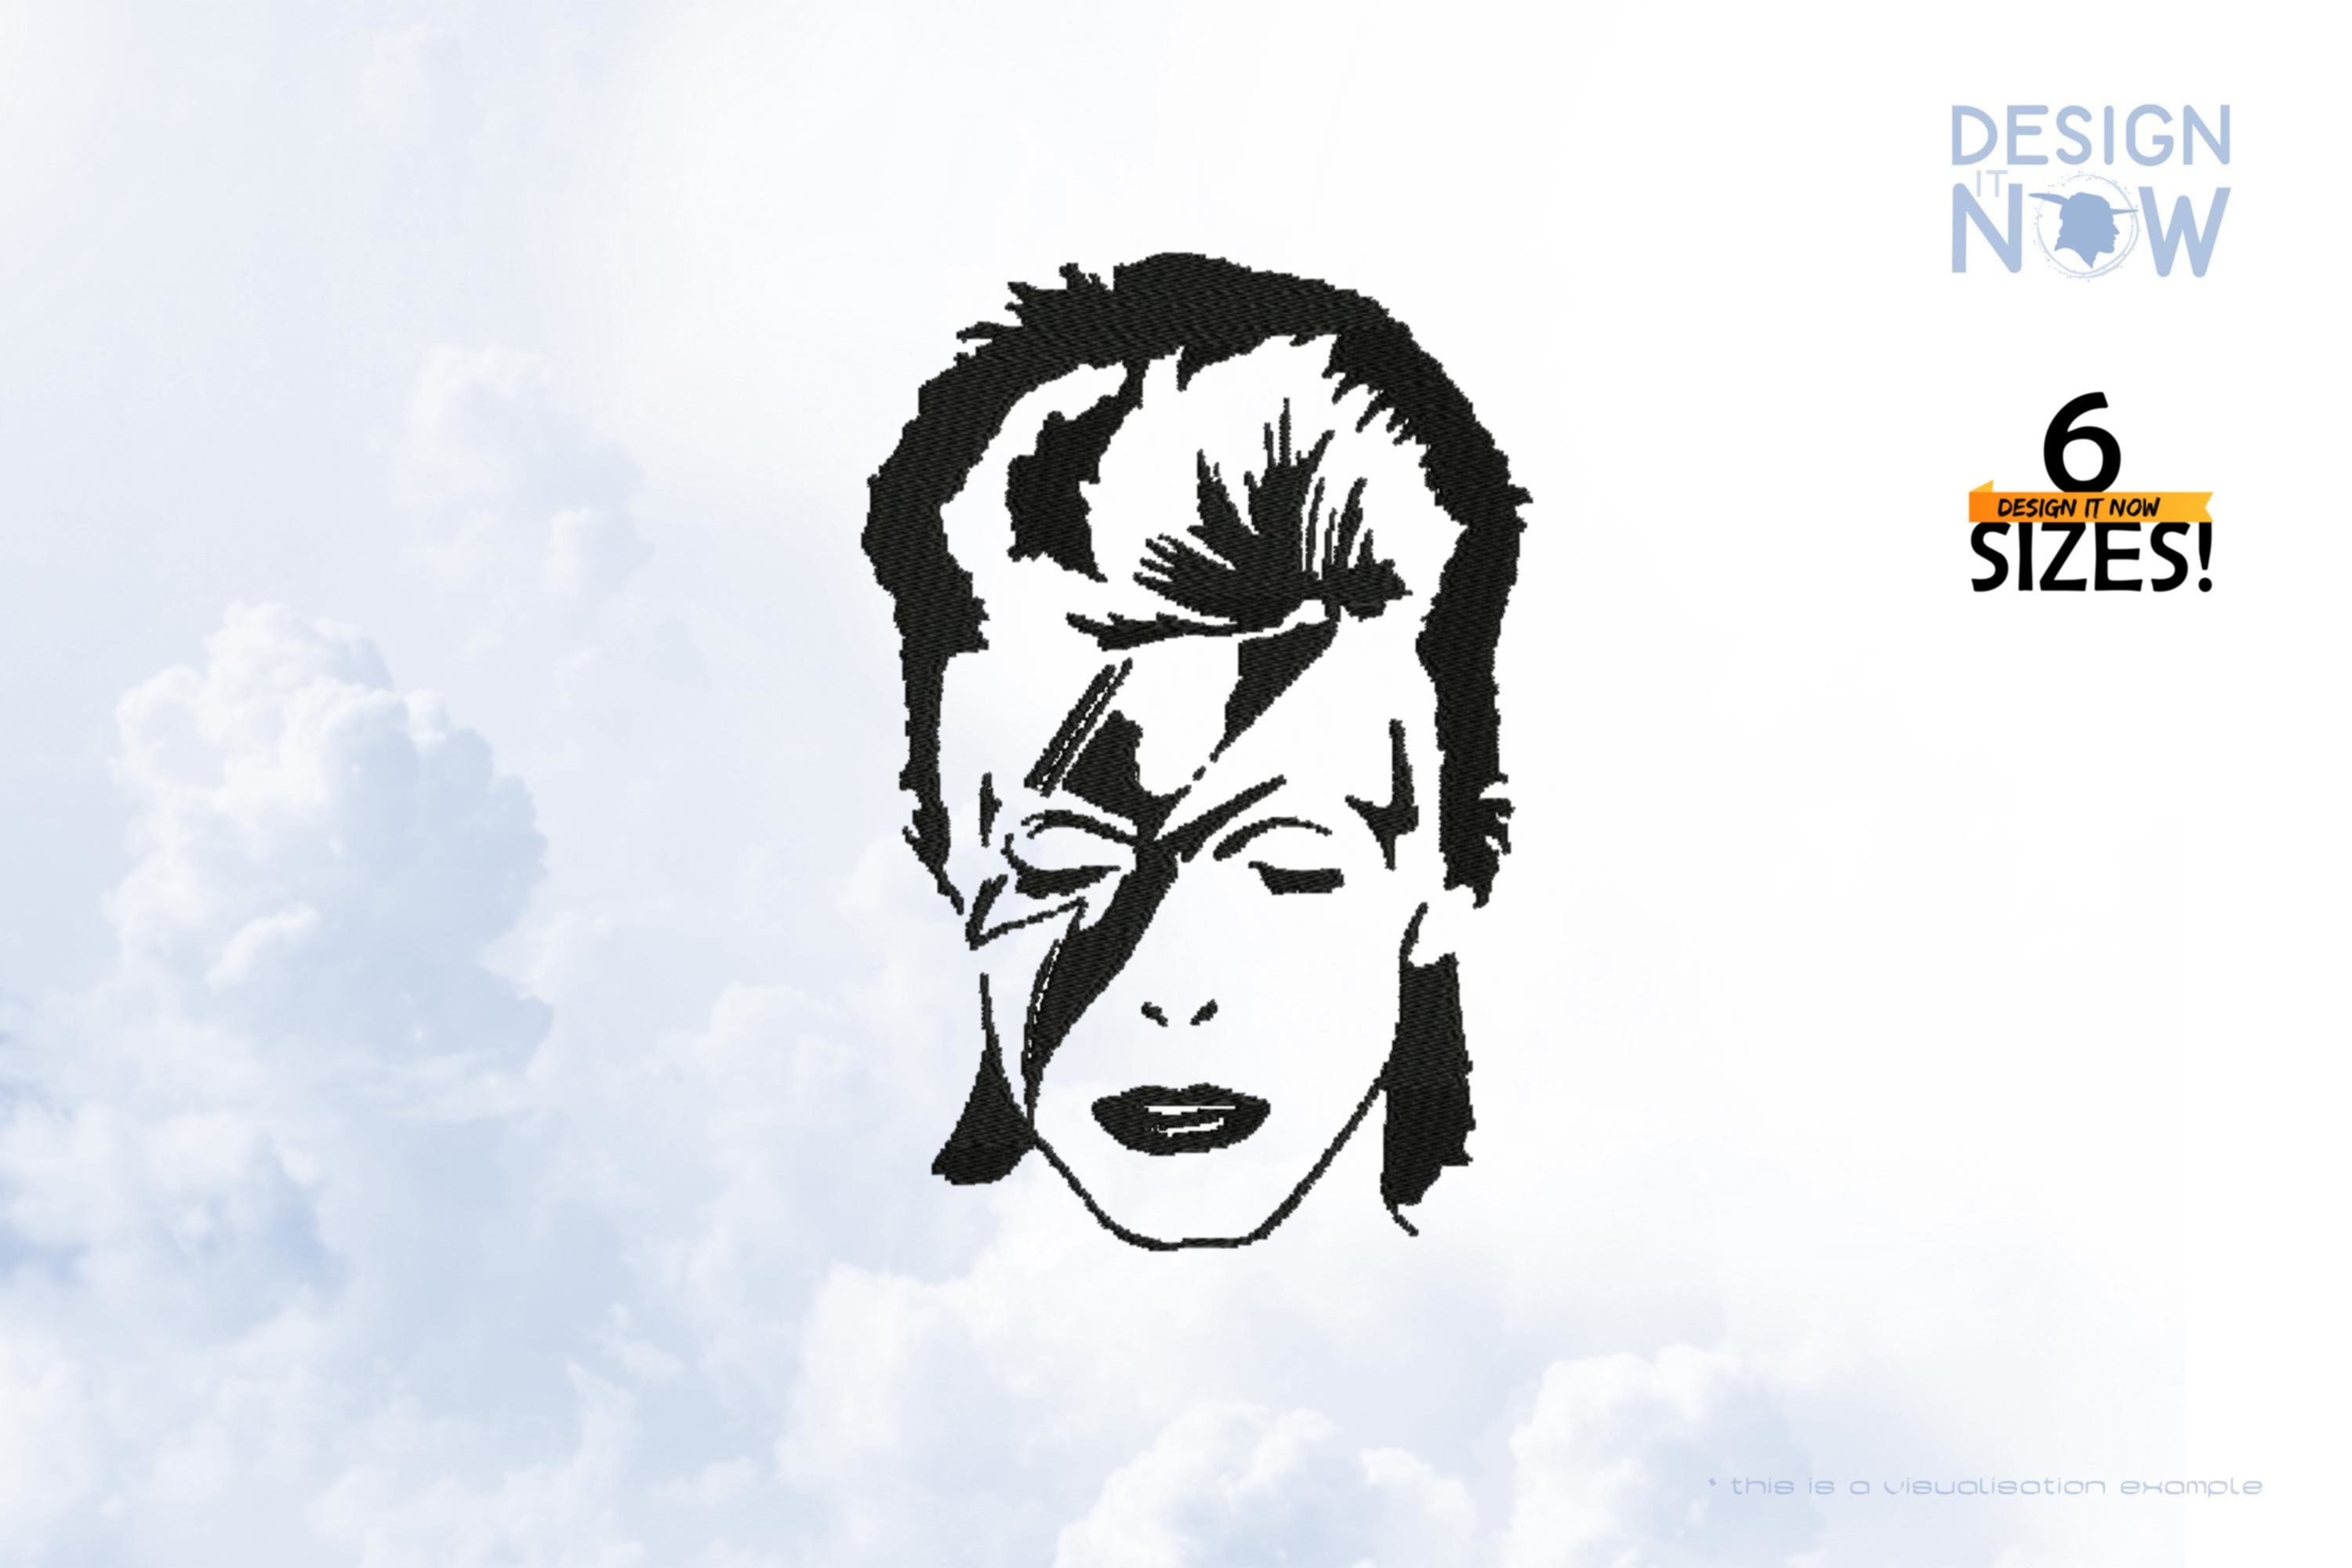 Tribute To Musician David Robert Jones aka David Bowie